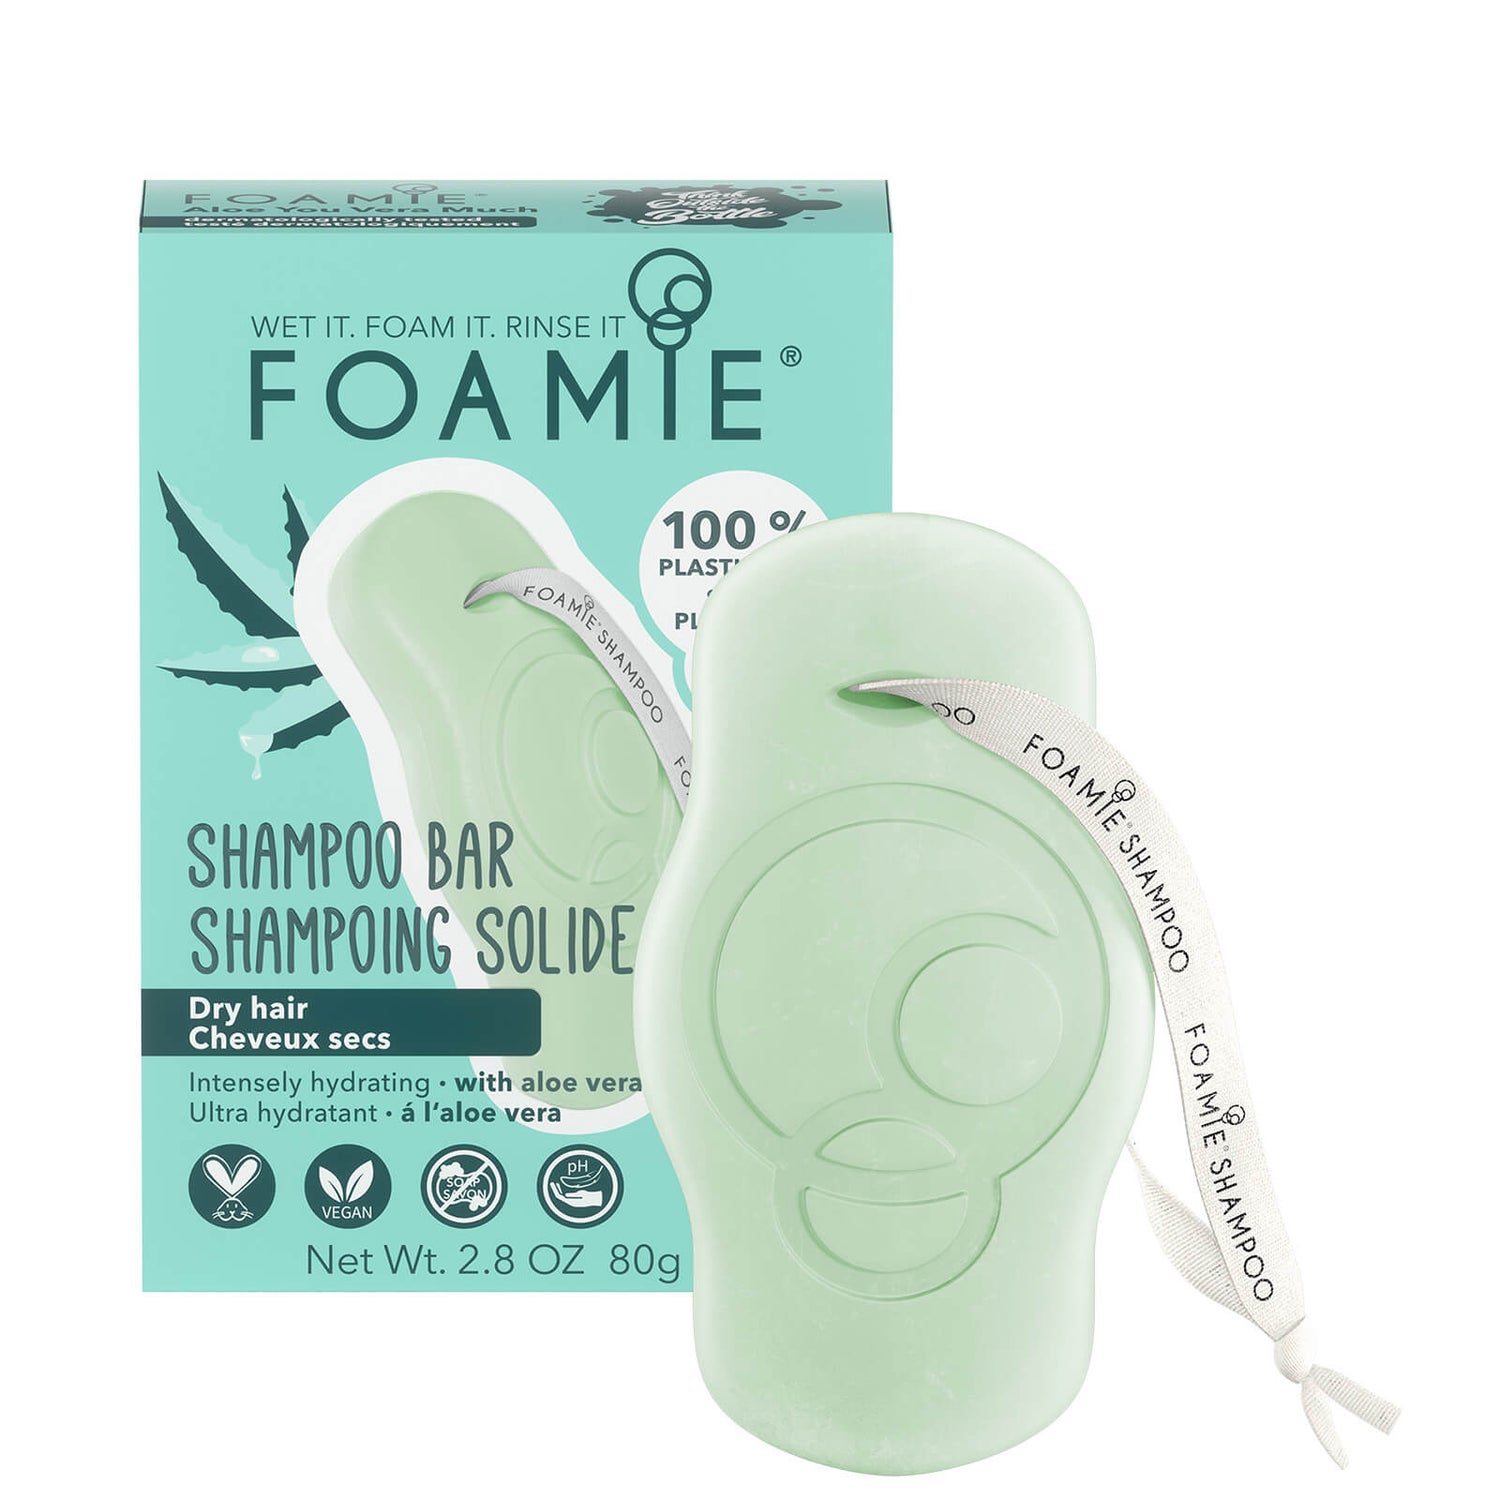 FOAMIE Shampoo Bar - Aloe Vera for Dry Hair